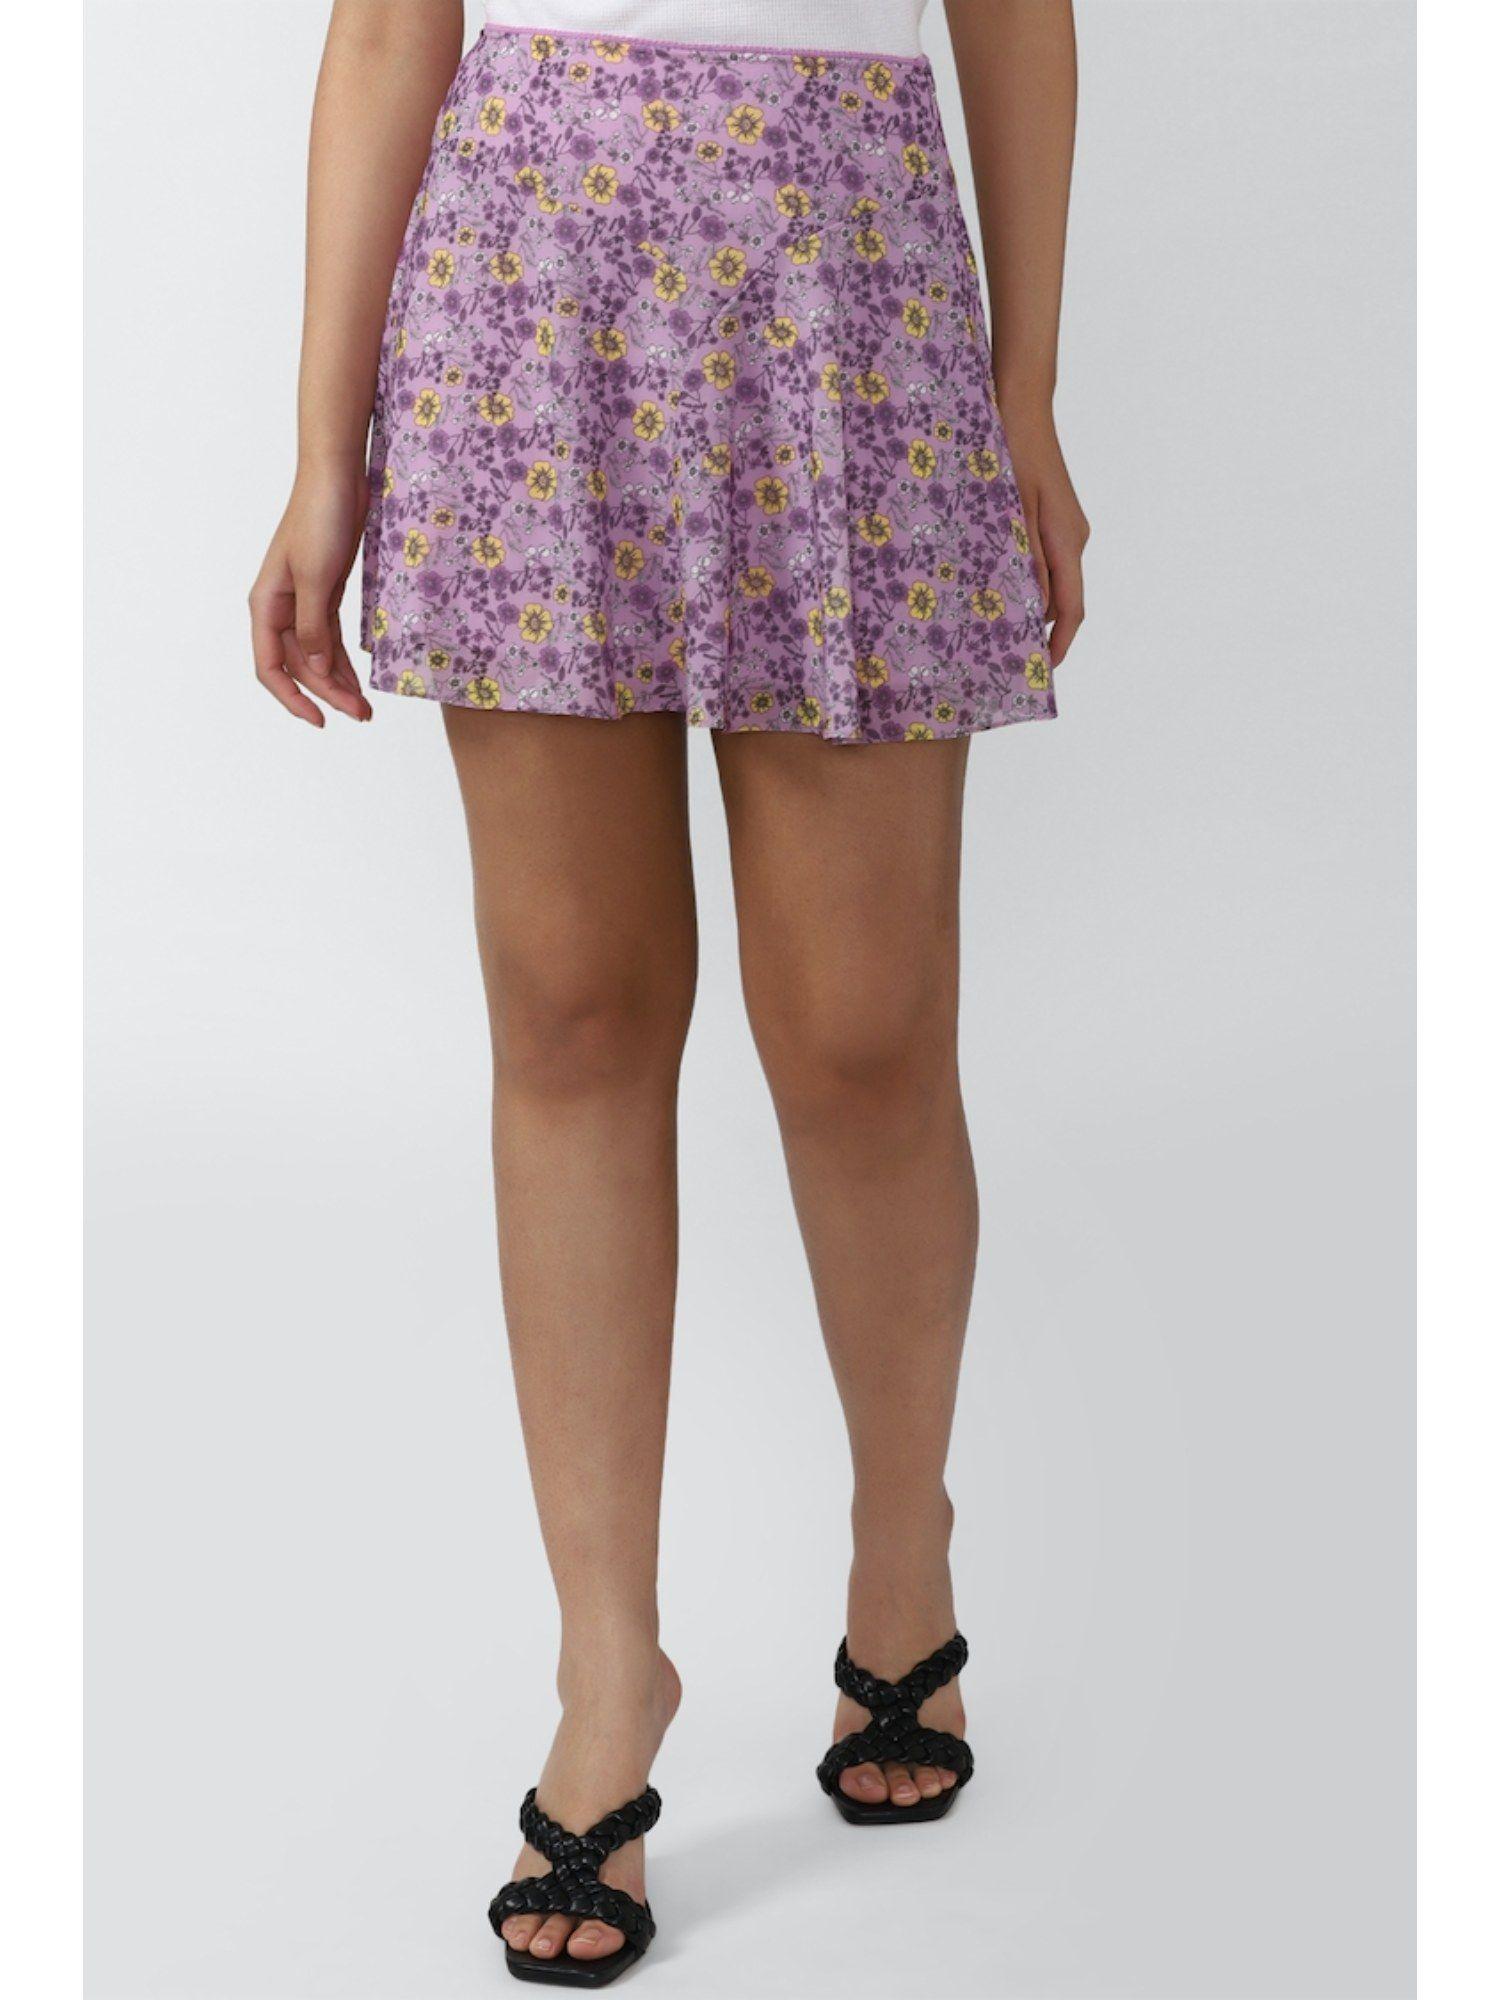 purple floral skirts